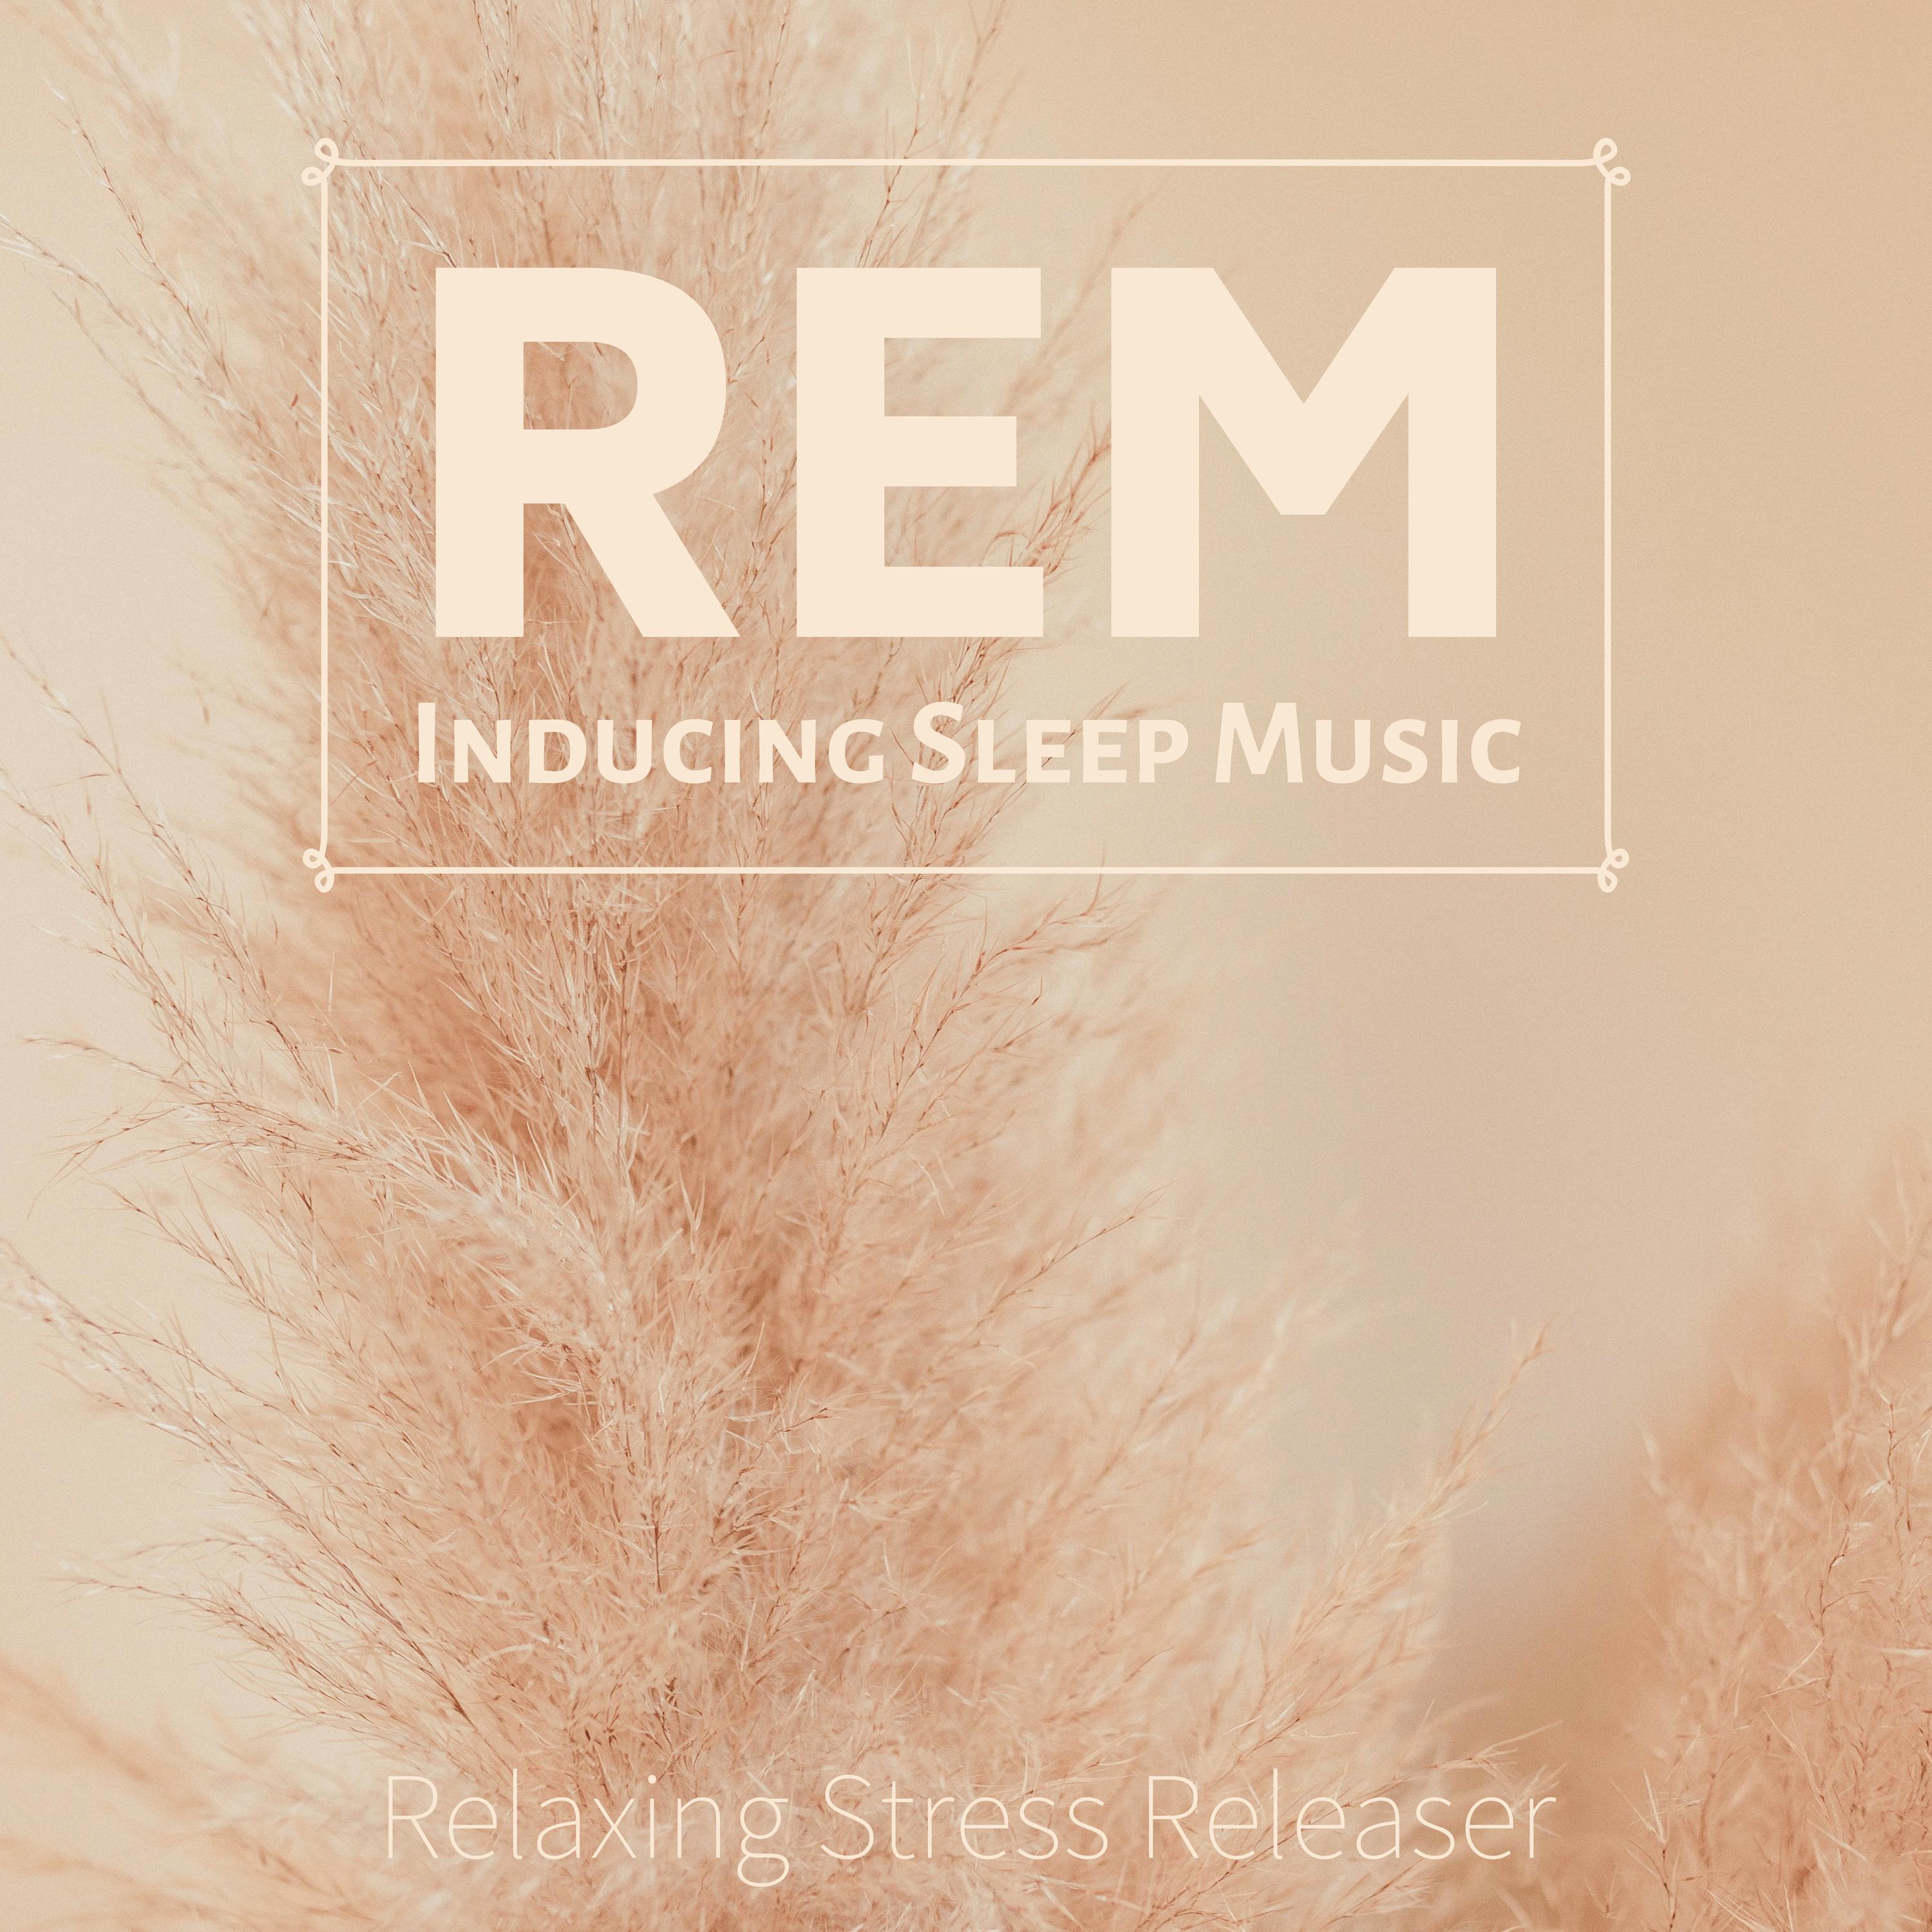 REM Inducing Sleep Music